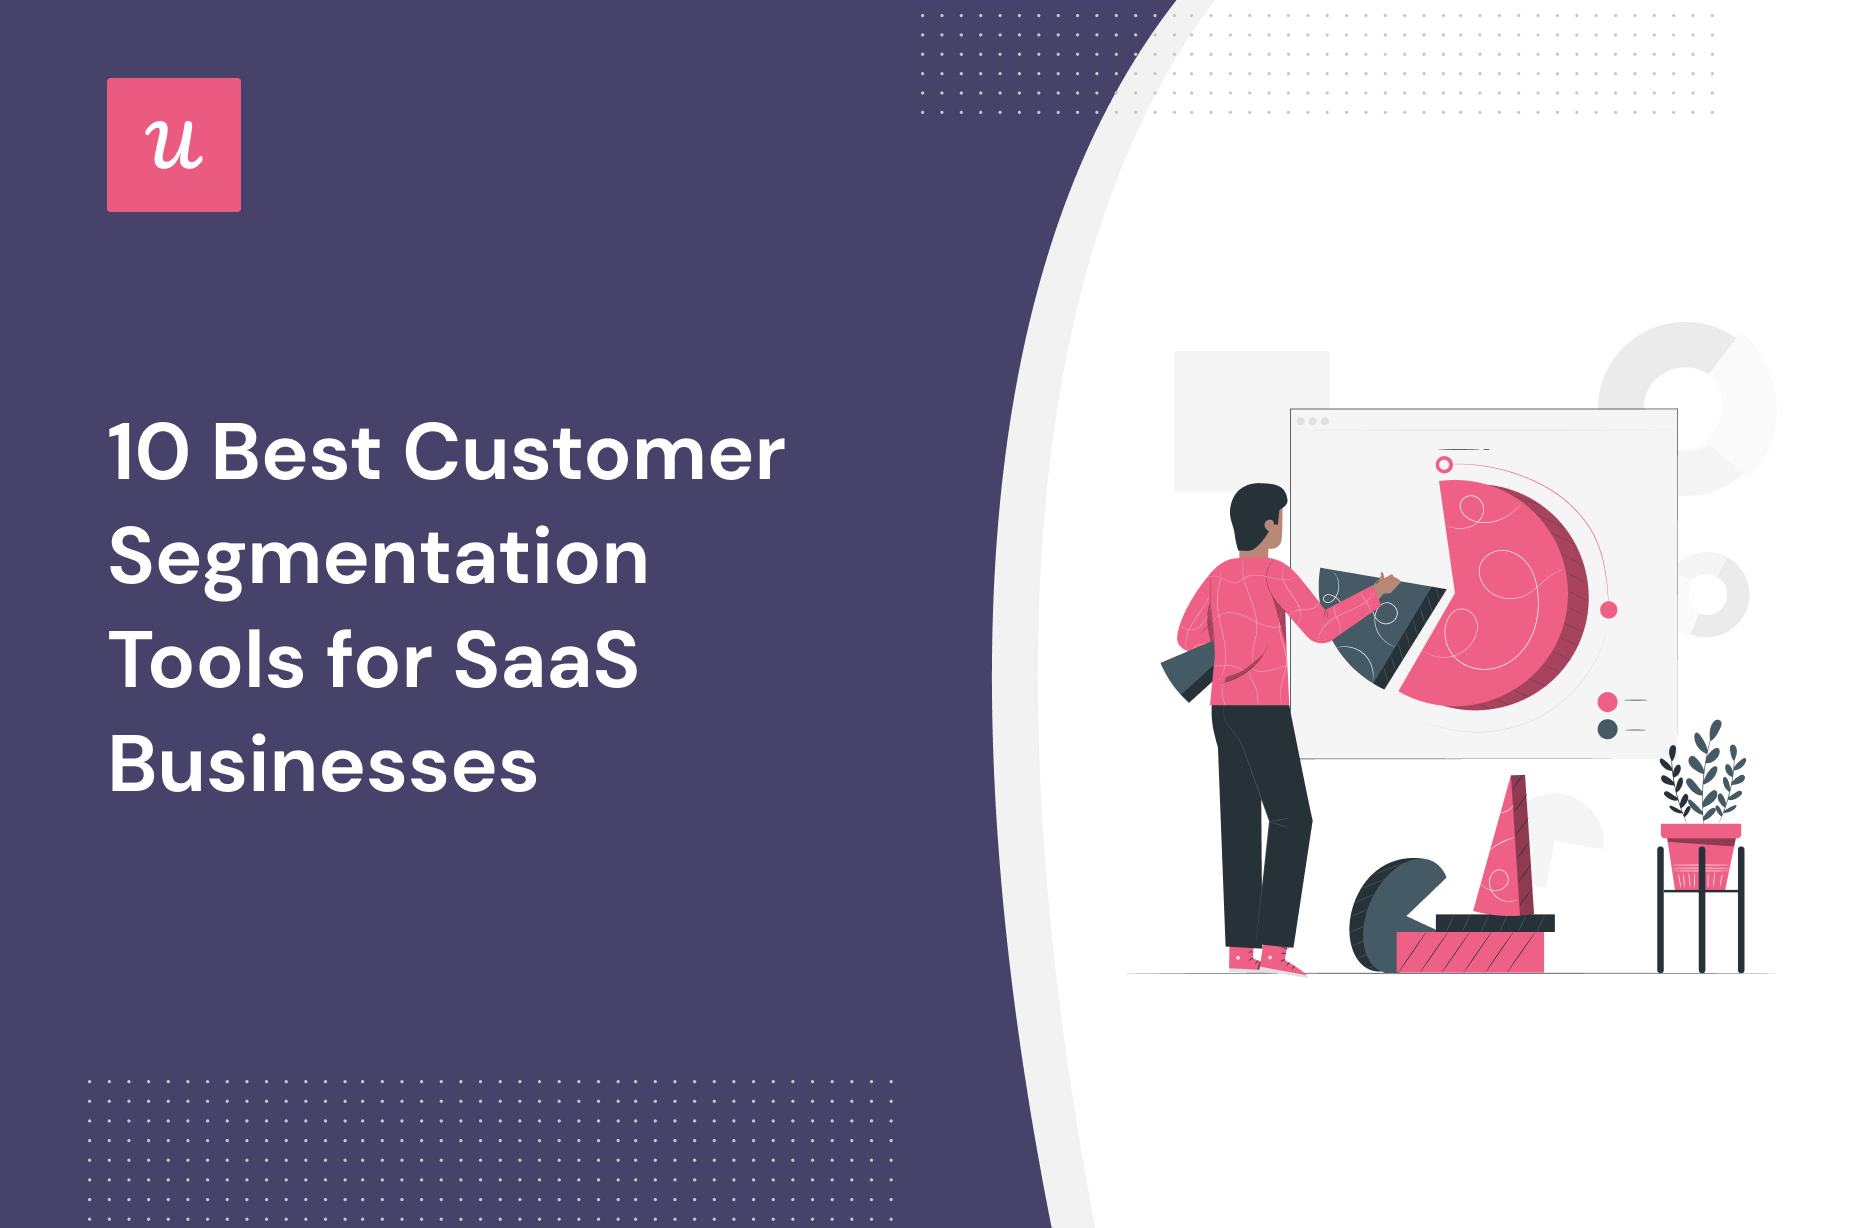 10 Best Customer Segmentation Tools for SaaS Businesses